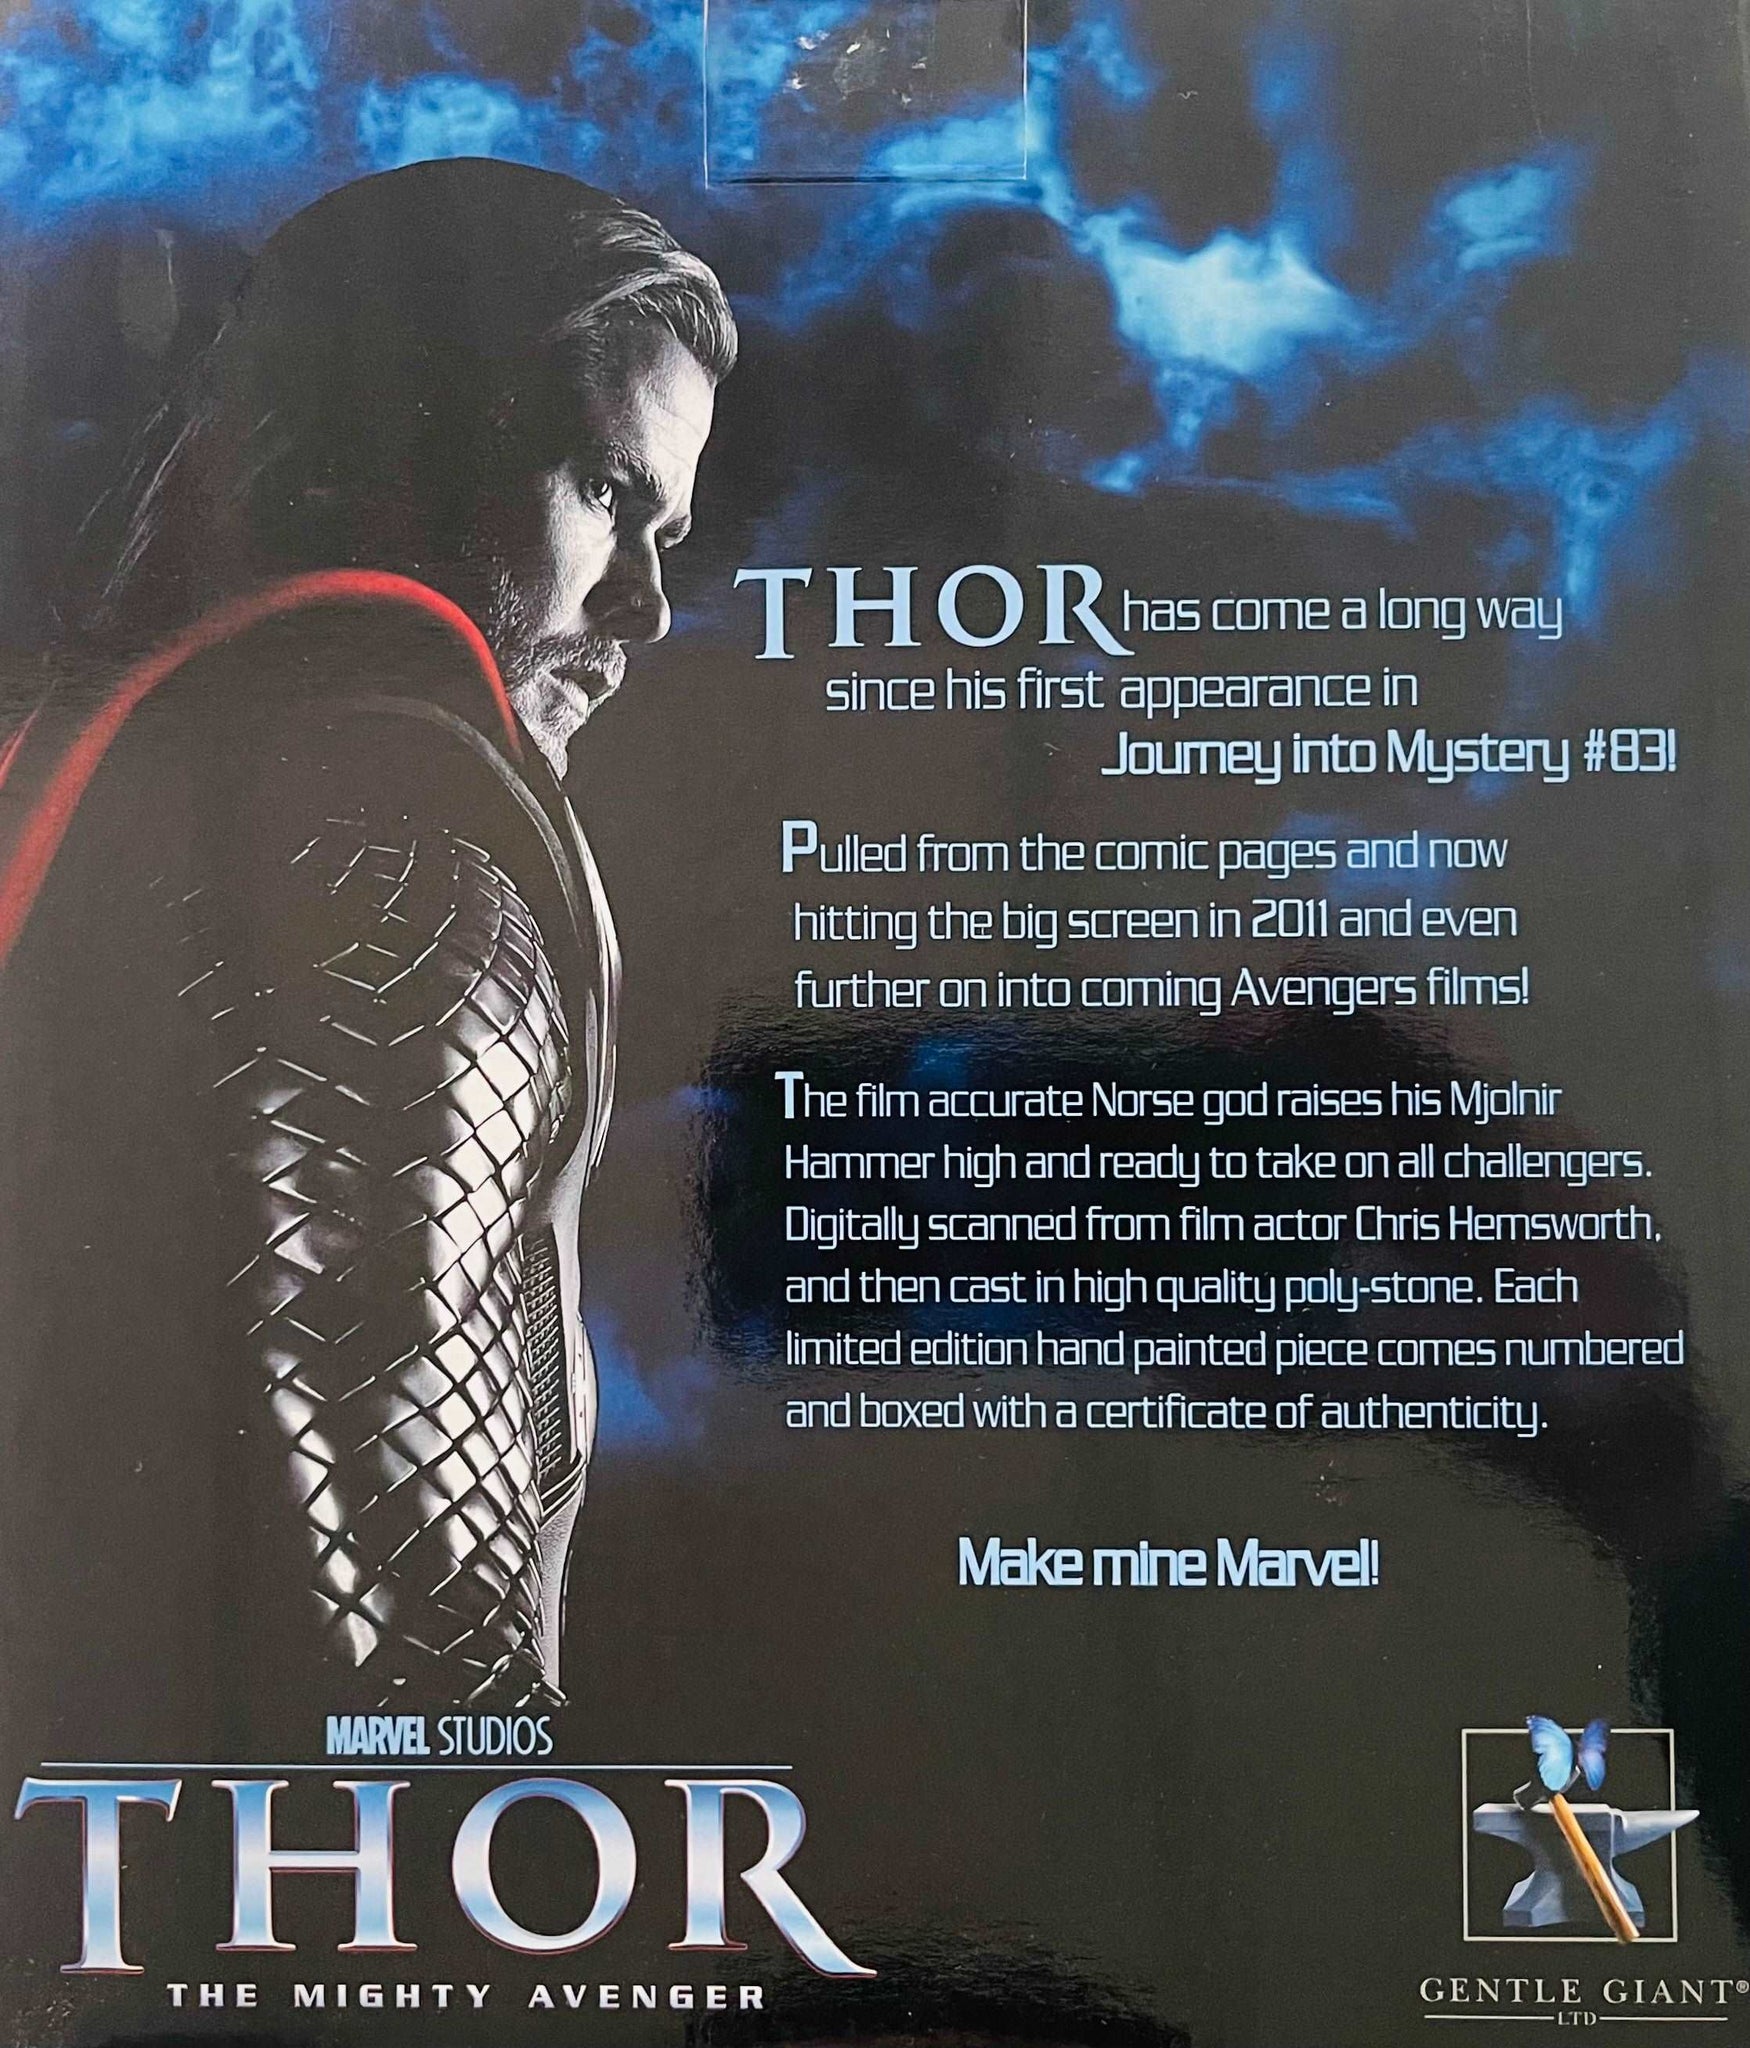 Chris Hemsworth Signed Marvel Studios Thor Statue Bust Limited